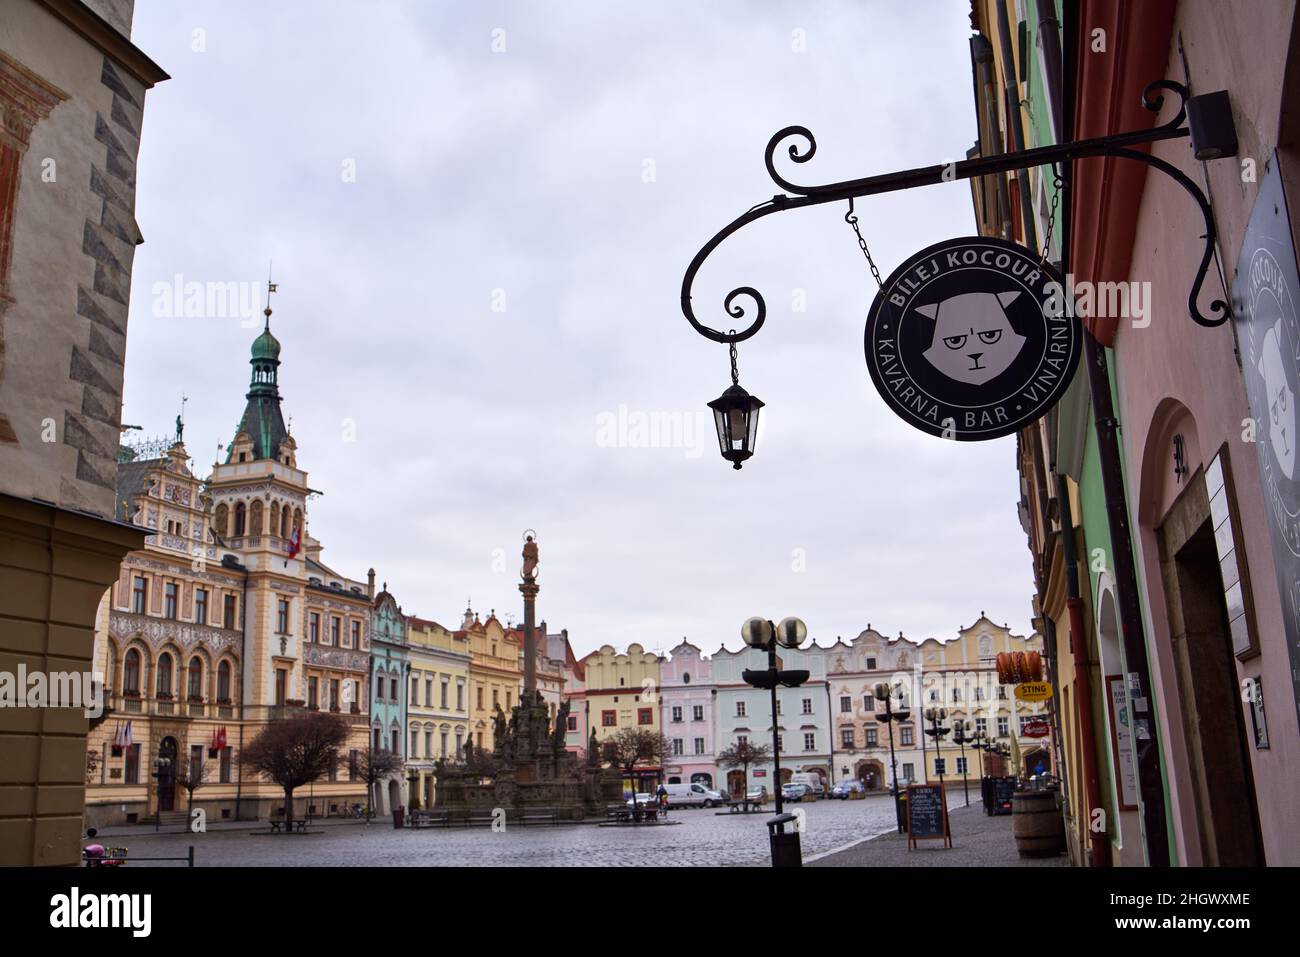 Czech republic prague cafe sign hi-res stock photography and images - Alamy